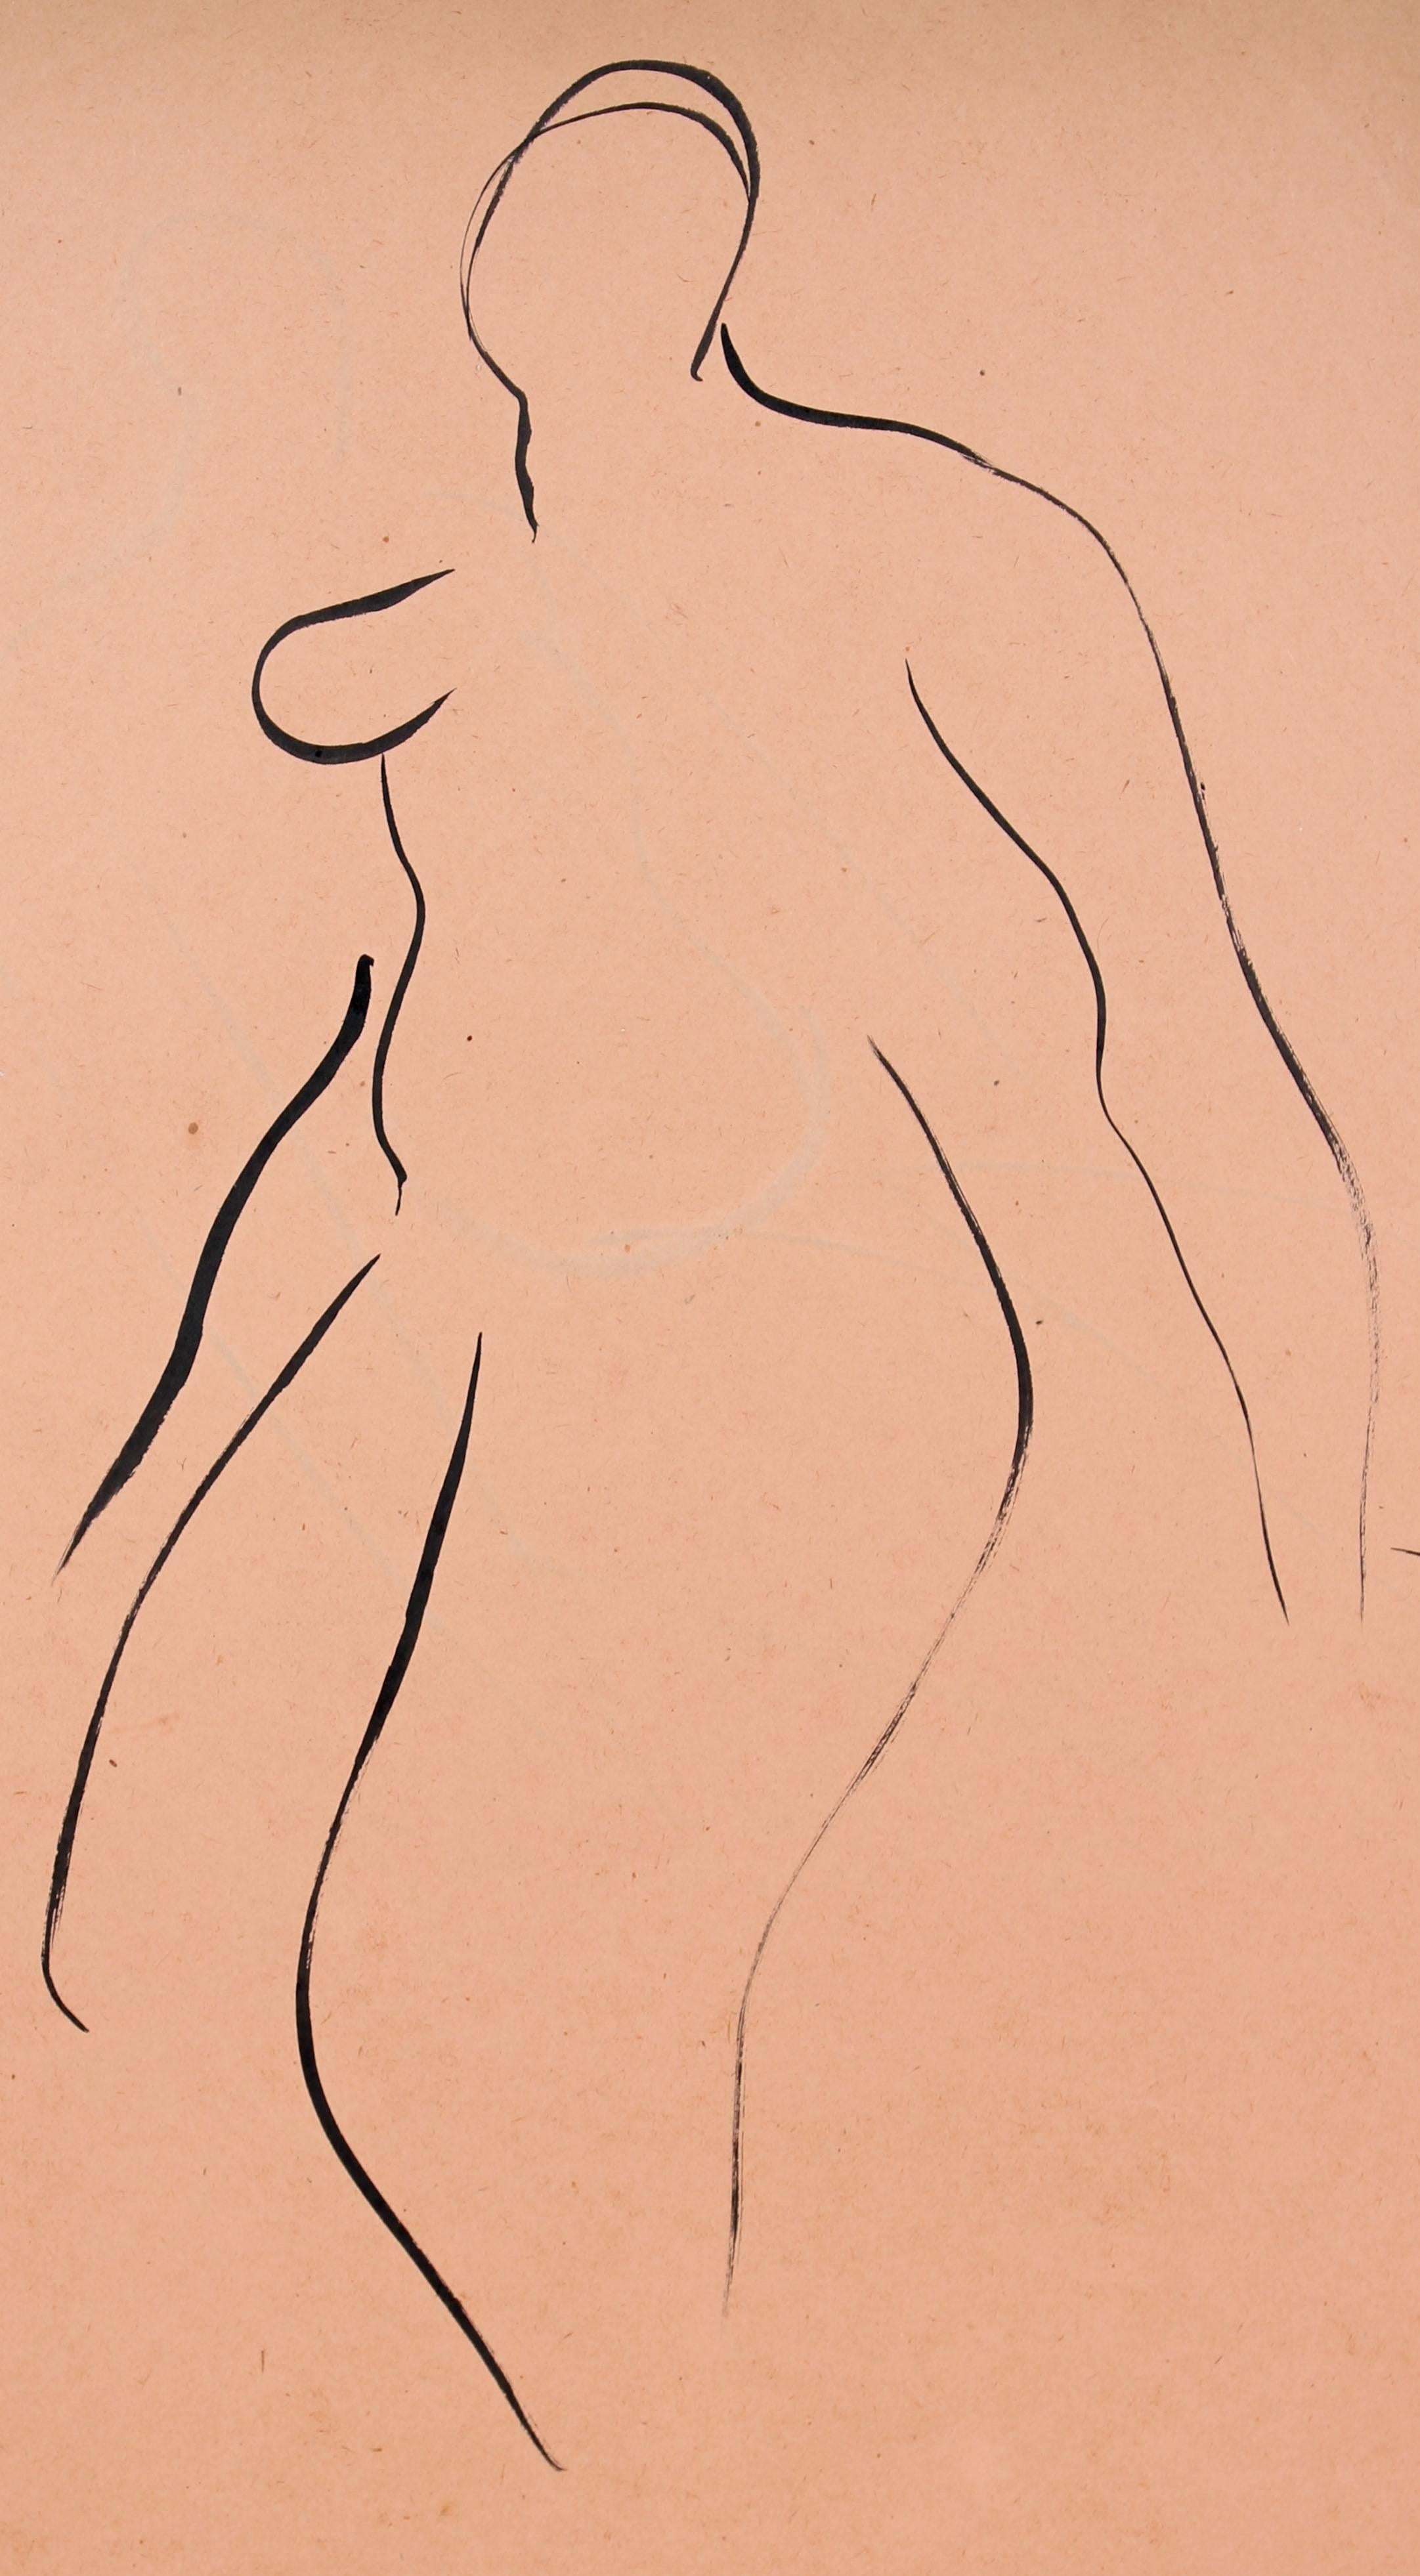 Helen Sewell Rennie Figurative Art - Minimal Nude Figure in Ink on Peach Paper, Mid Century